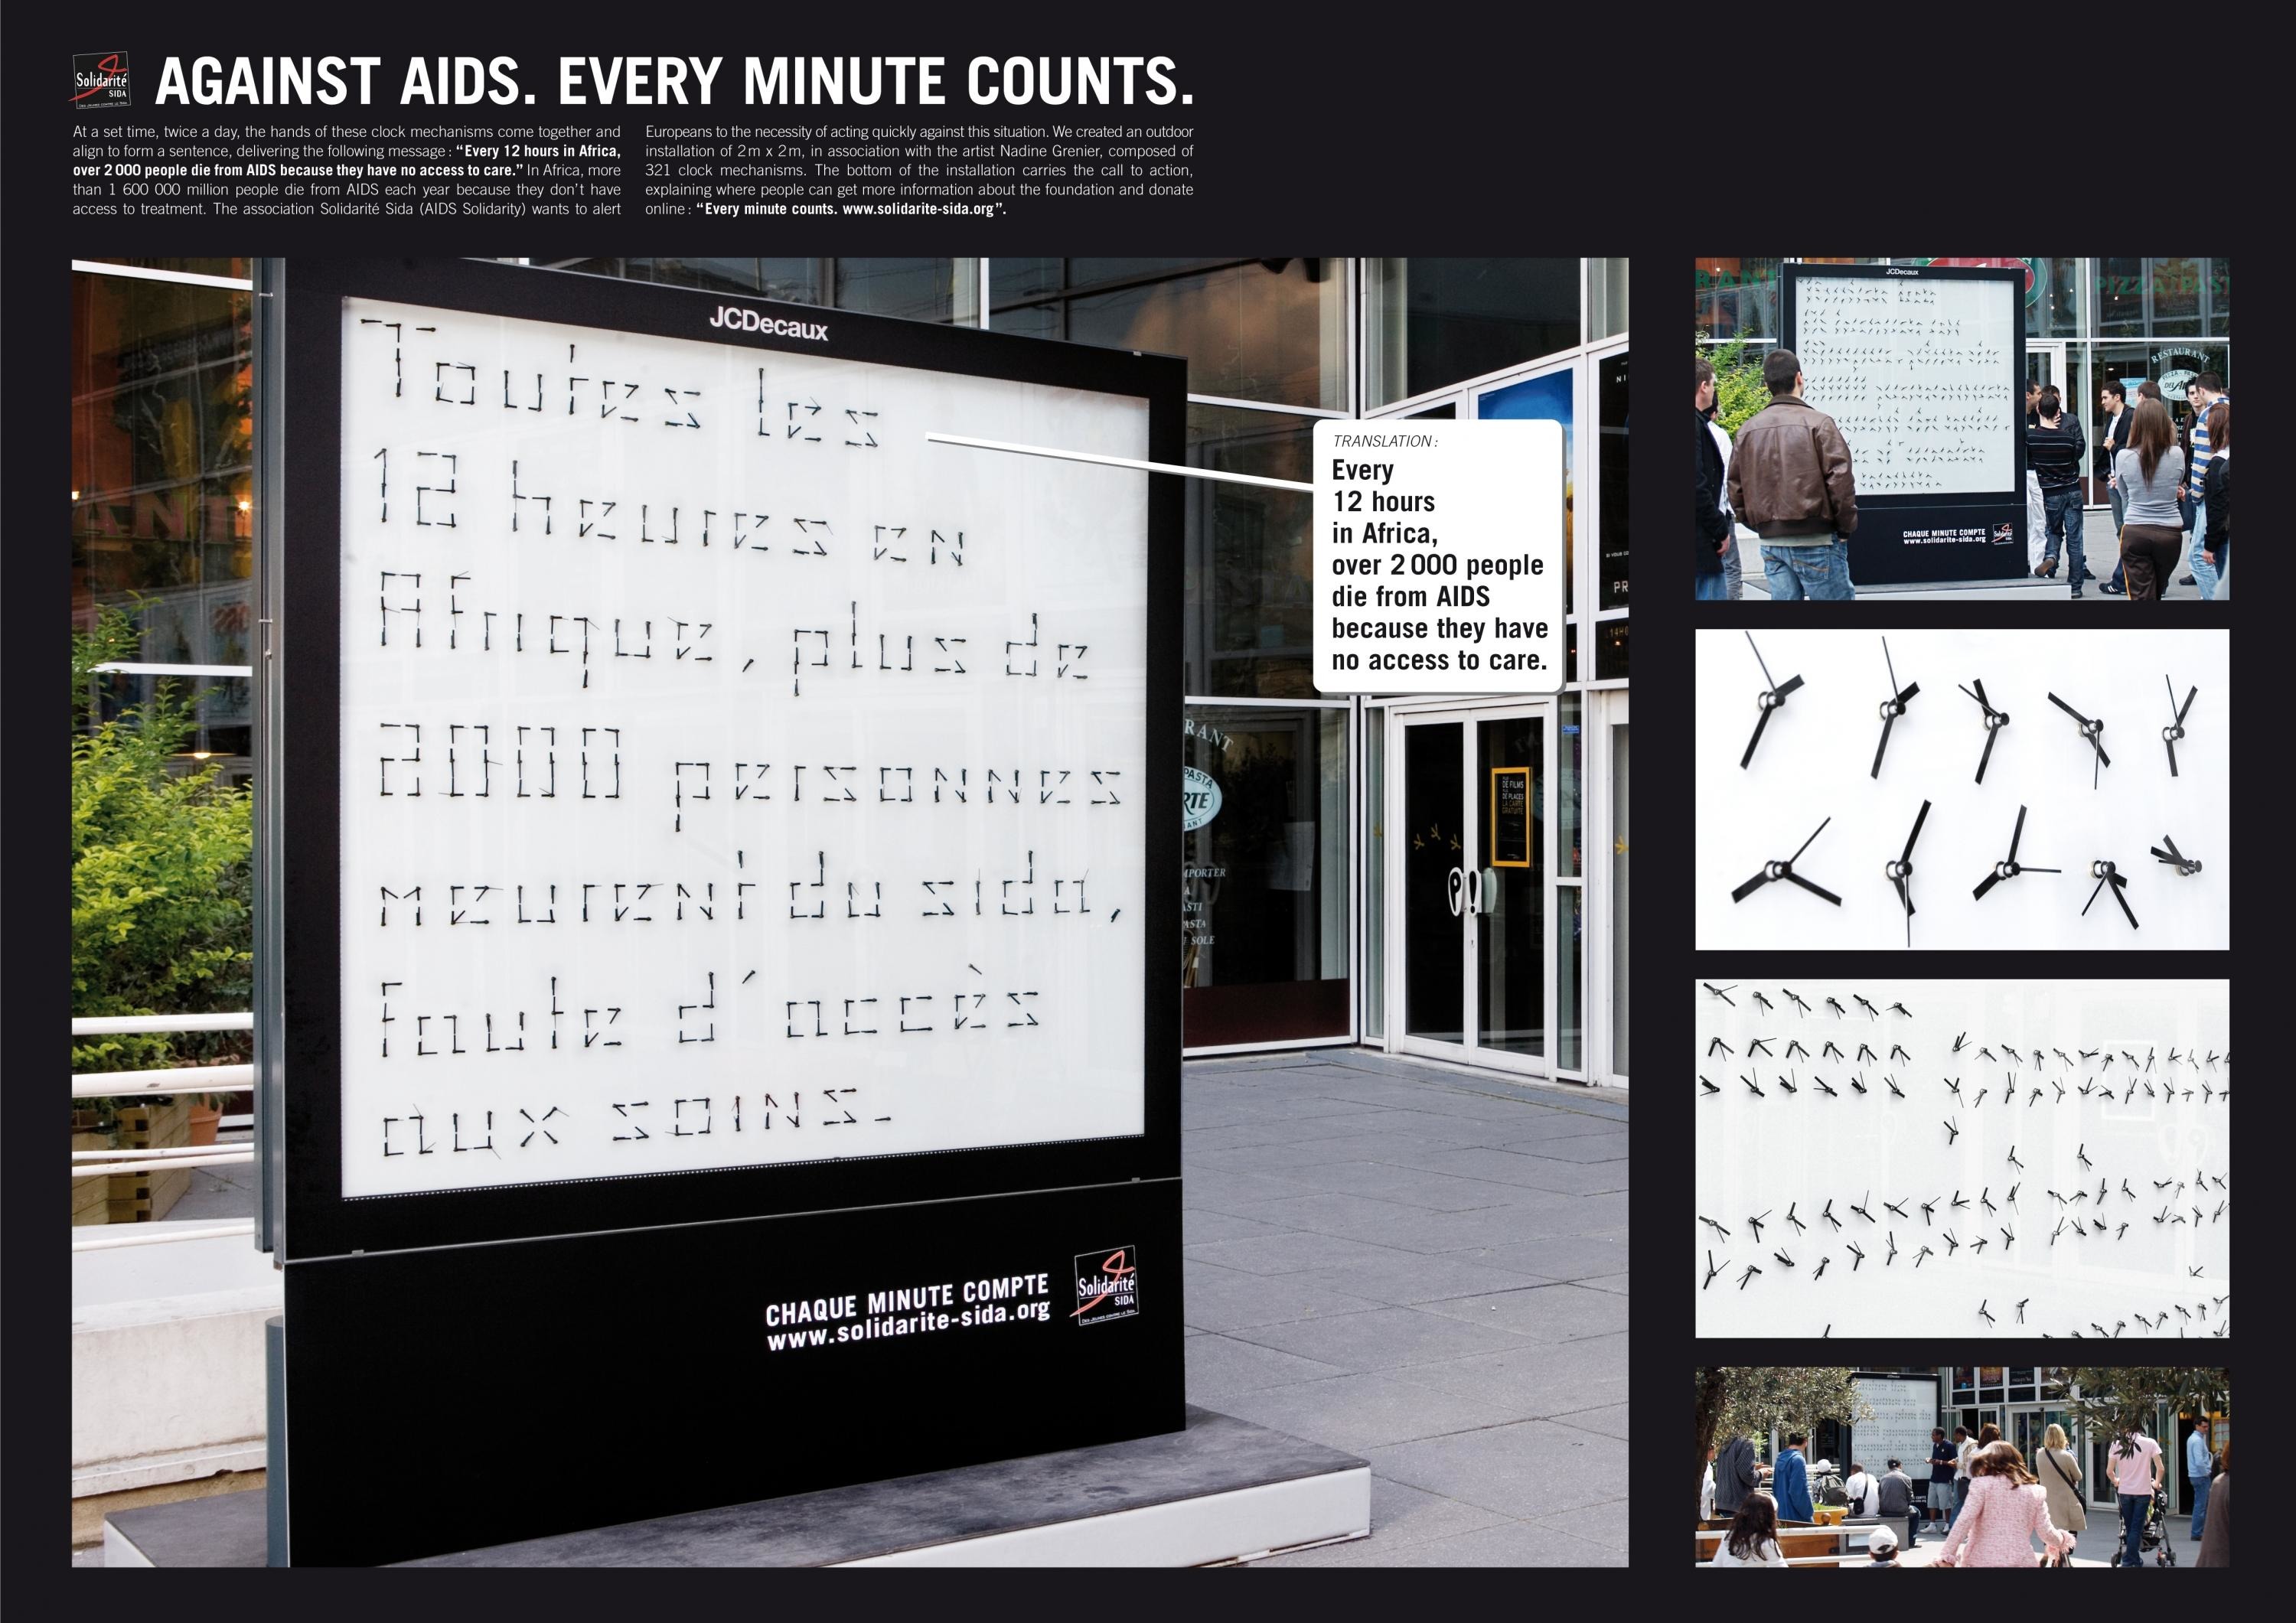 FONDS SOLIDARITÉ SIDA AFRIQUE (AIDS AFRICA SOLIDARITY FUND)